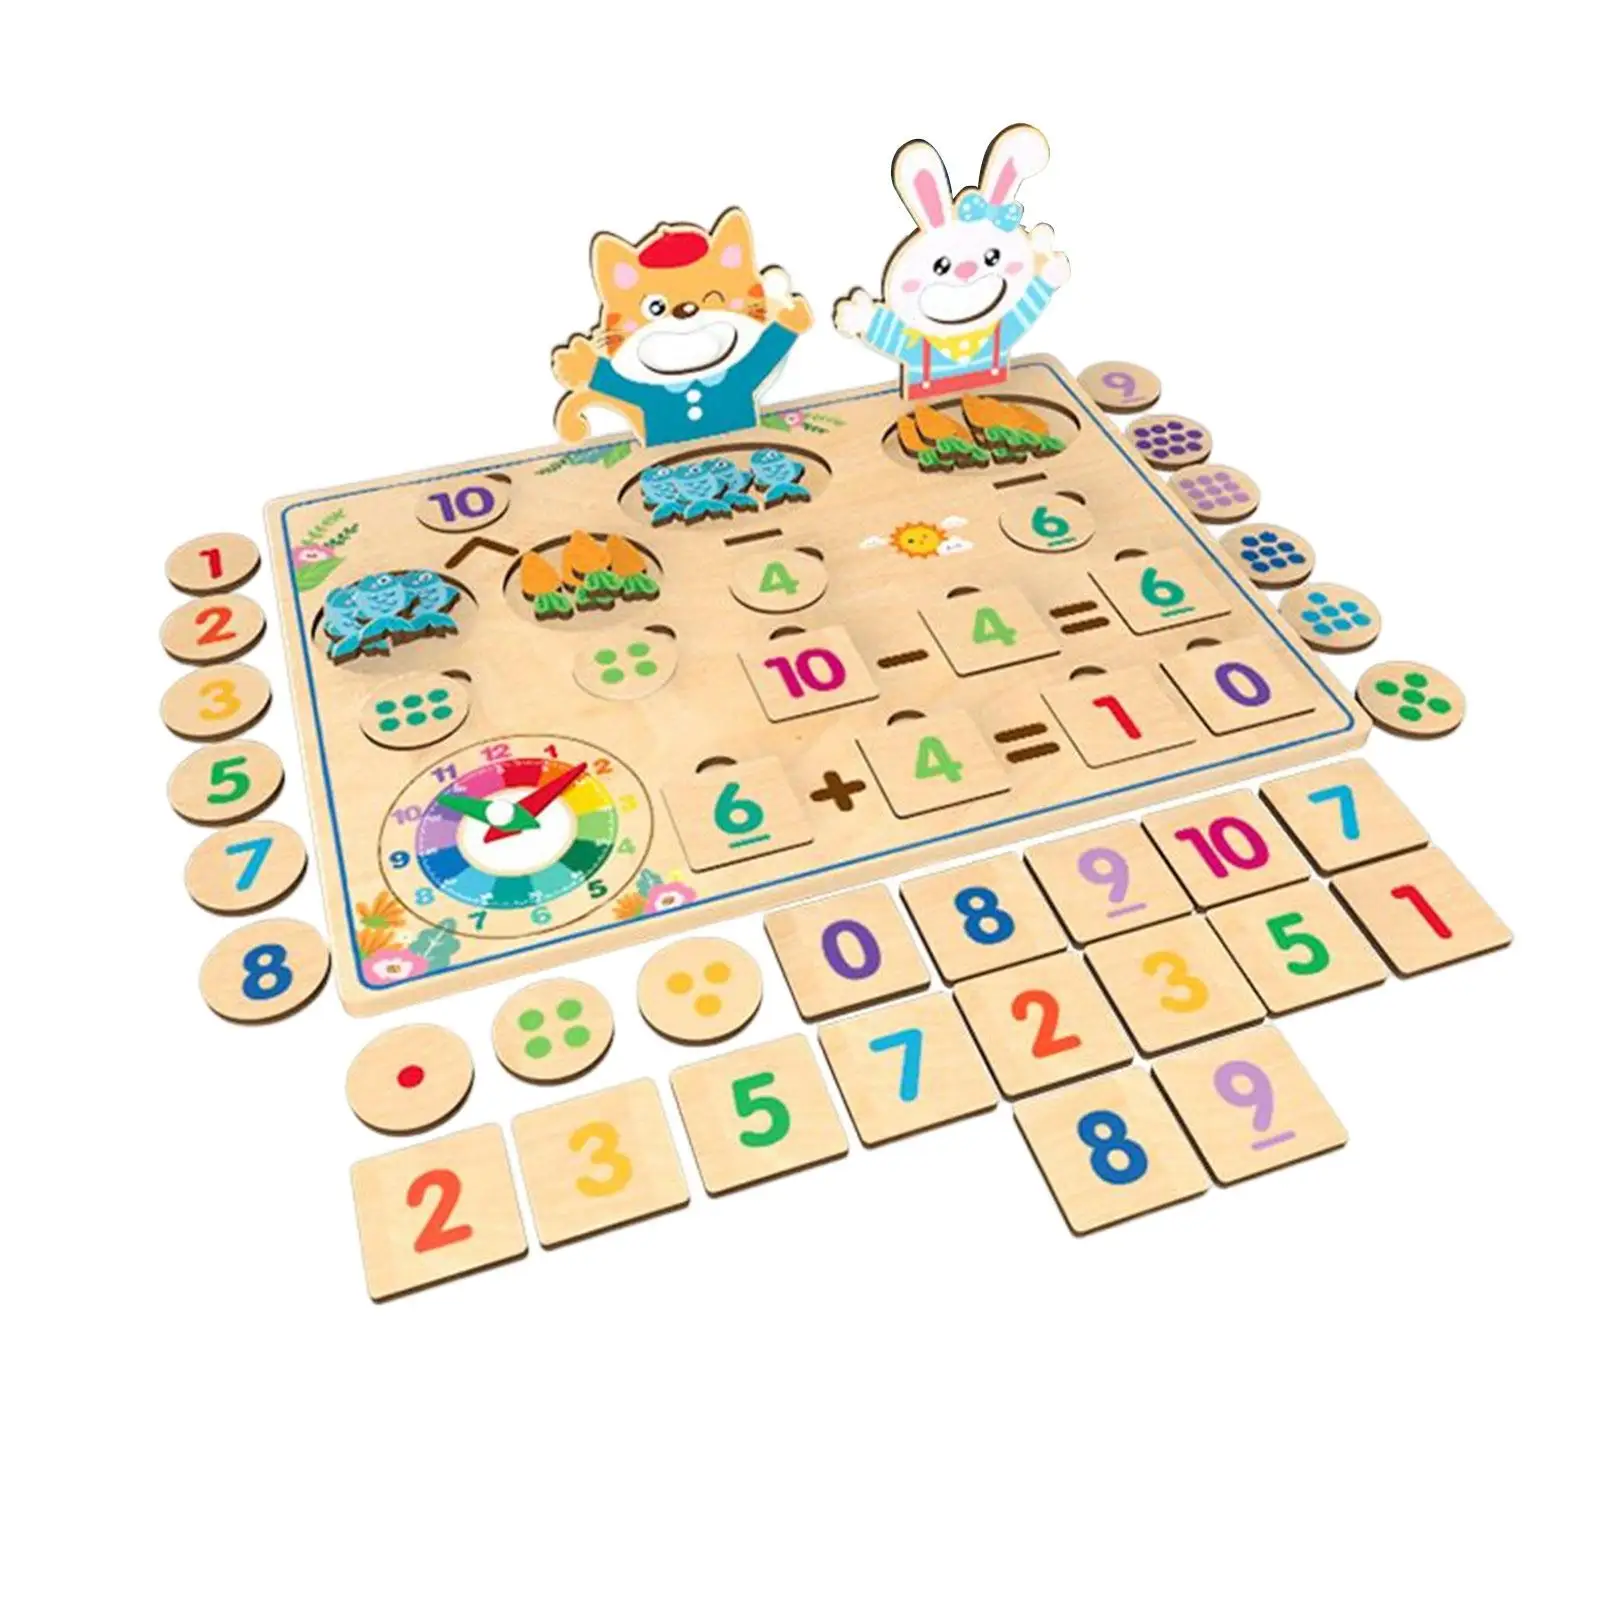 

Montessori Math Game Gadget Calculation Board Made Premium Material Present for Kids Accessory Sturdy Fine Workmanship Counting